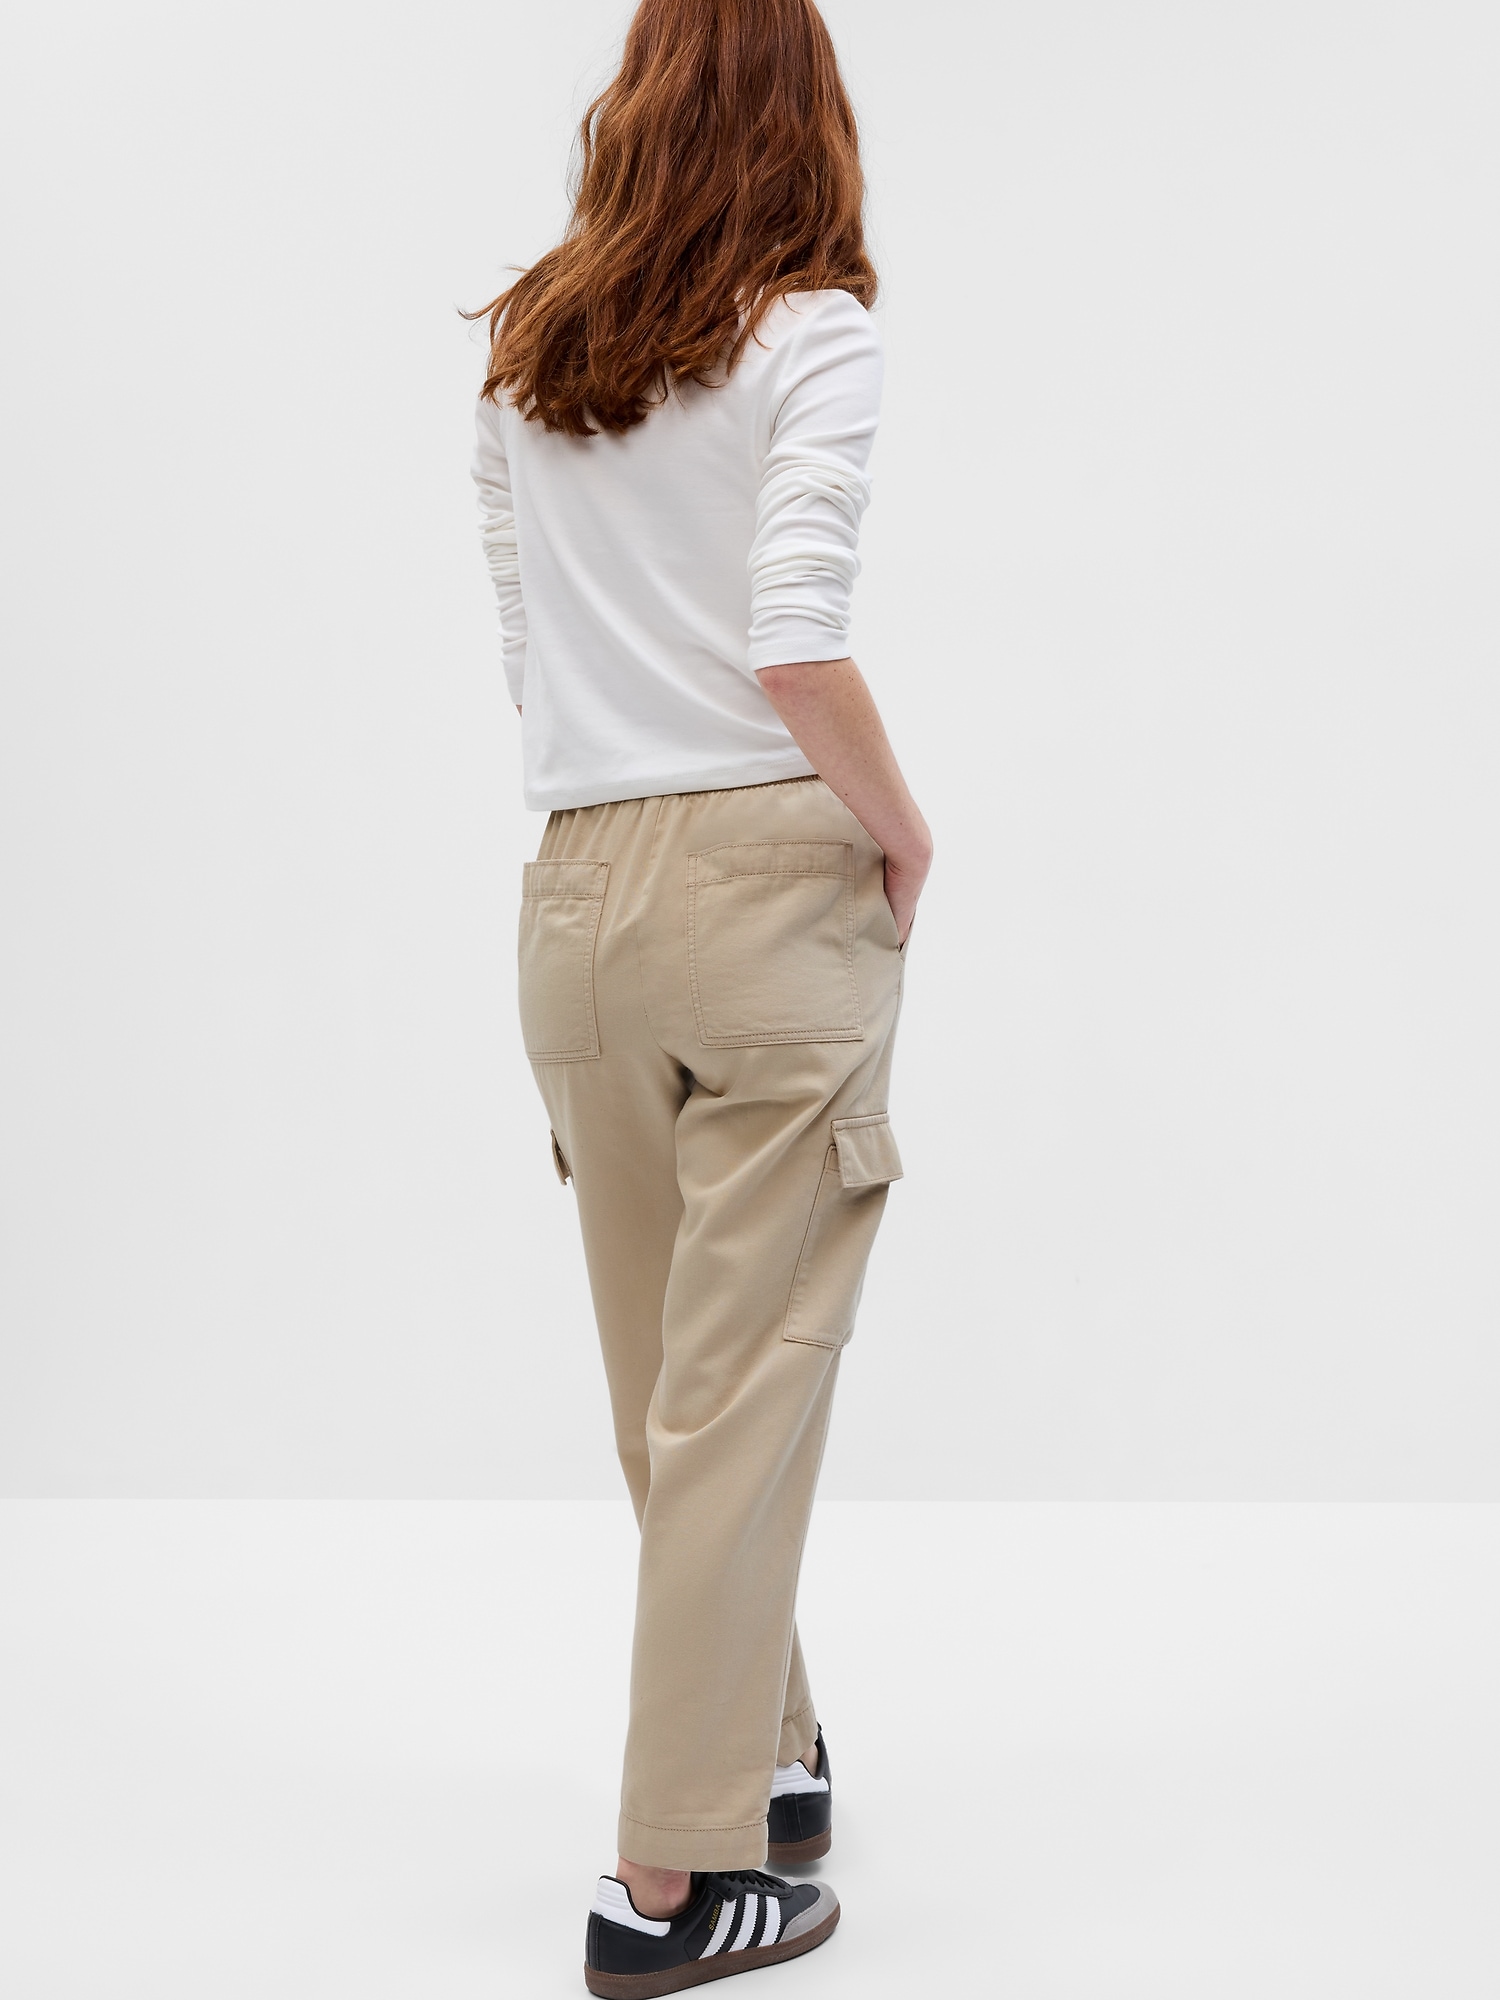 njshnmn Women's High Rise Ripped Skinny Jeans Distressed Jeggings Trousers  Stretch Denim Pants - Walmart.com